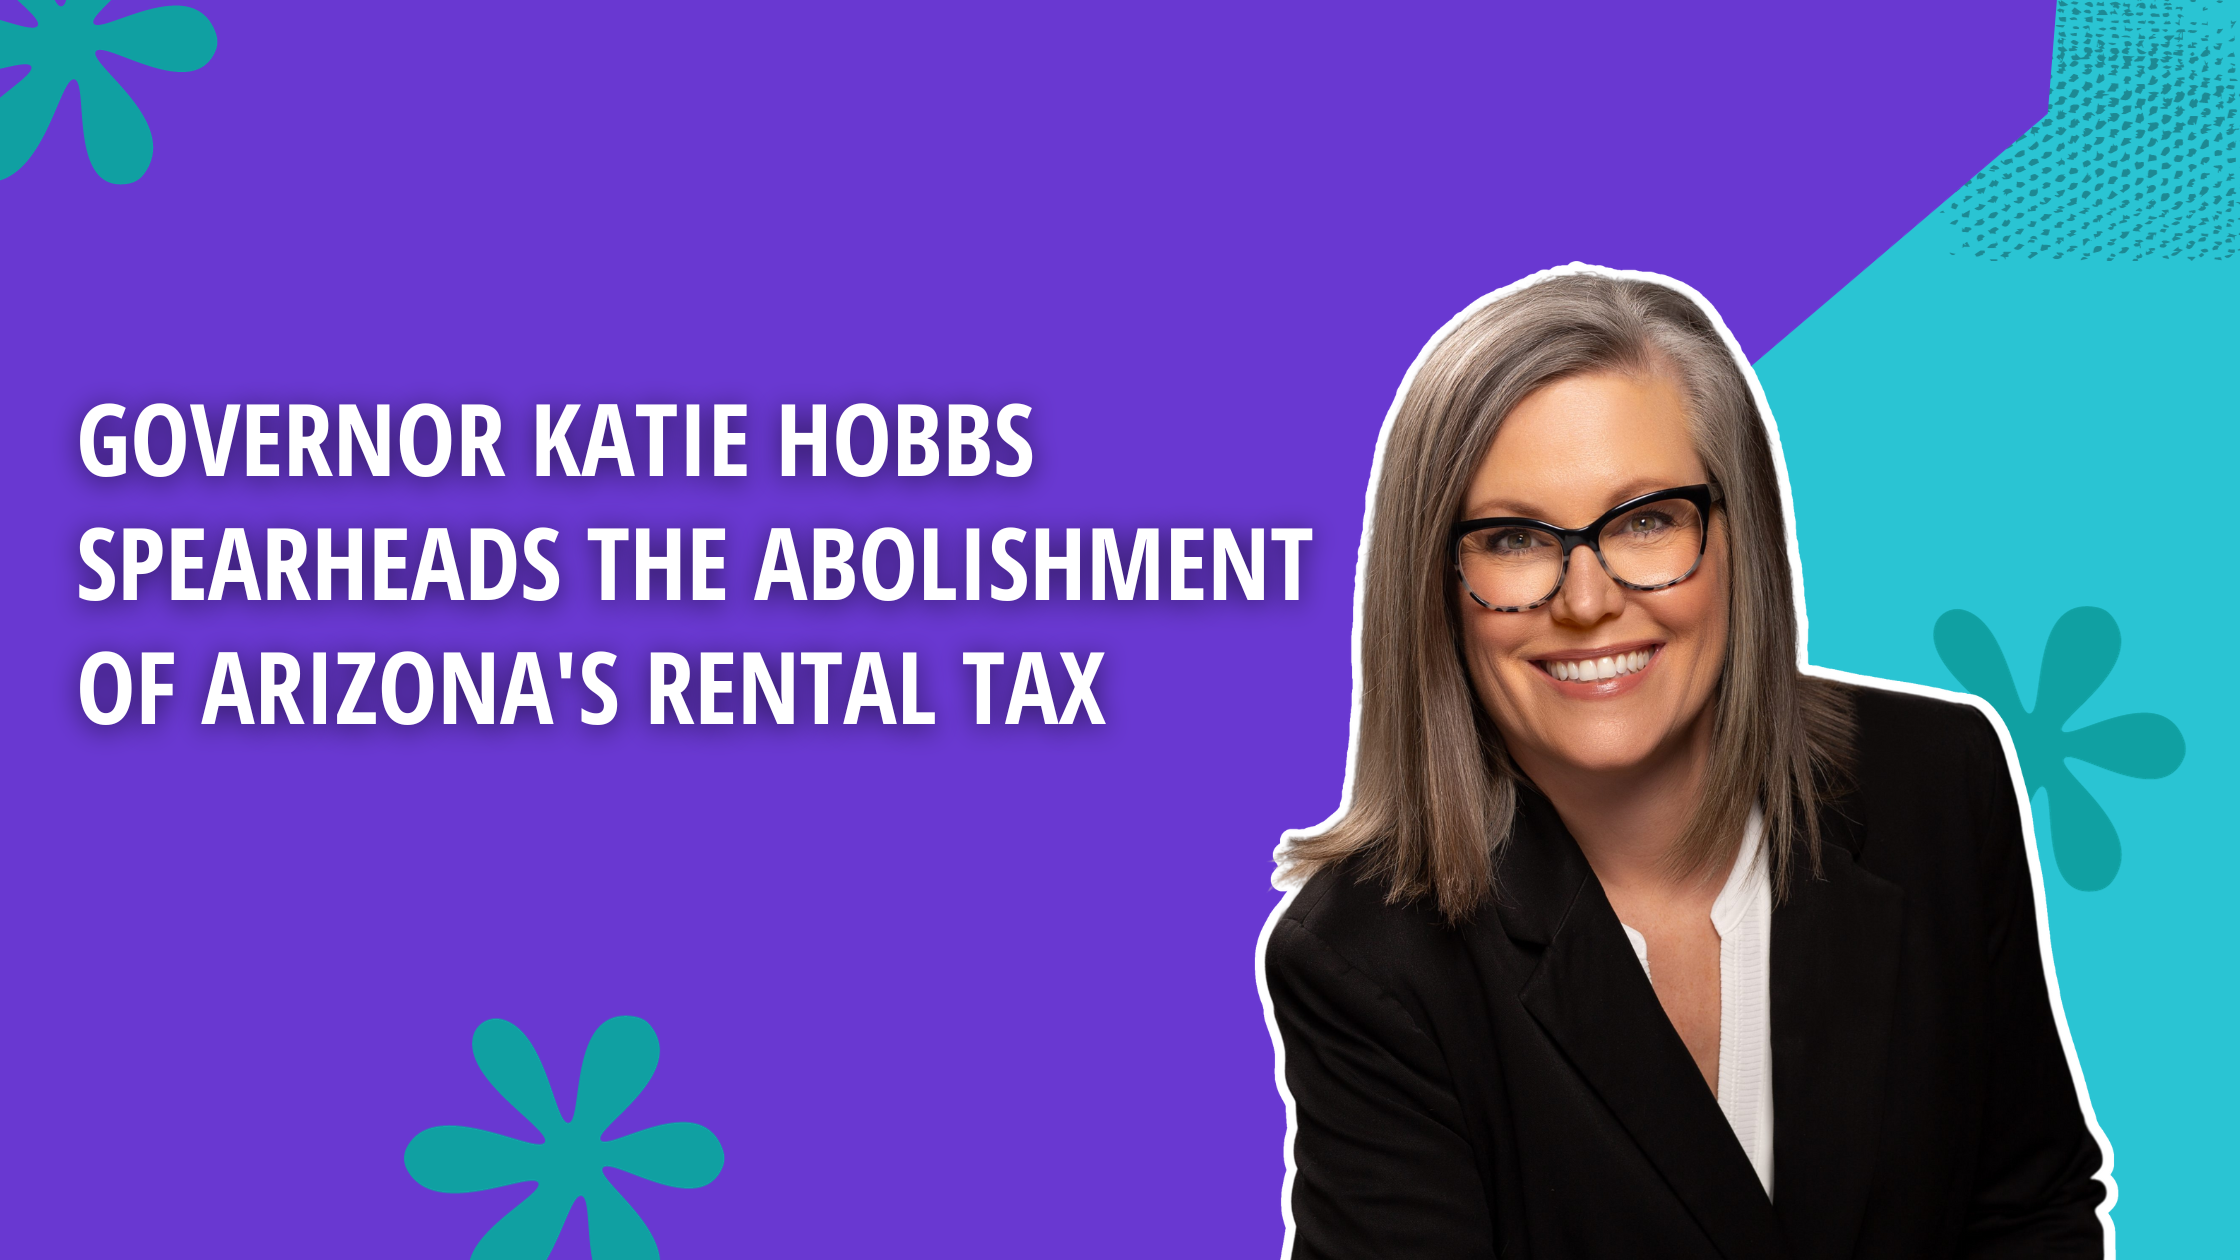 Governor Katie Hobbs Spearheads the Abolishment of Arizona's Rental Tax